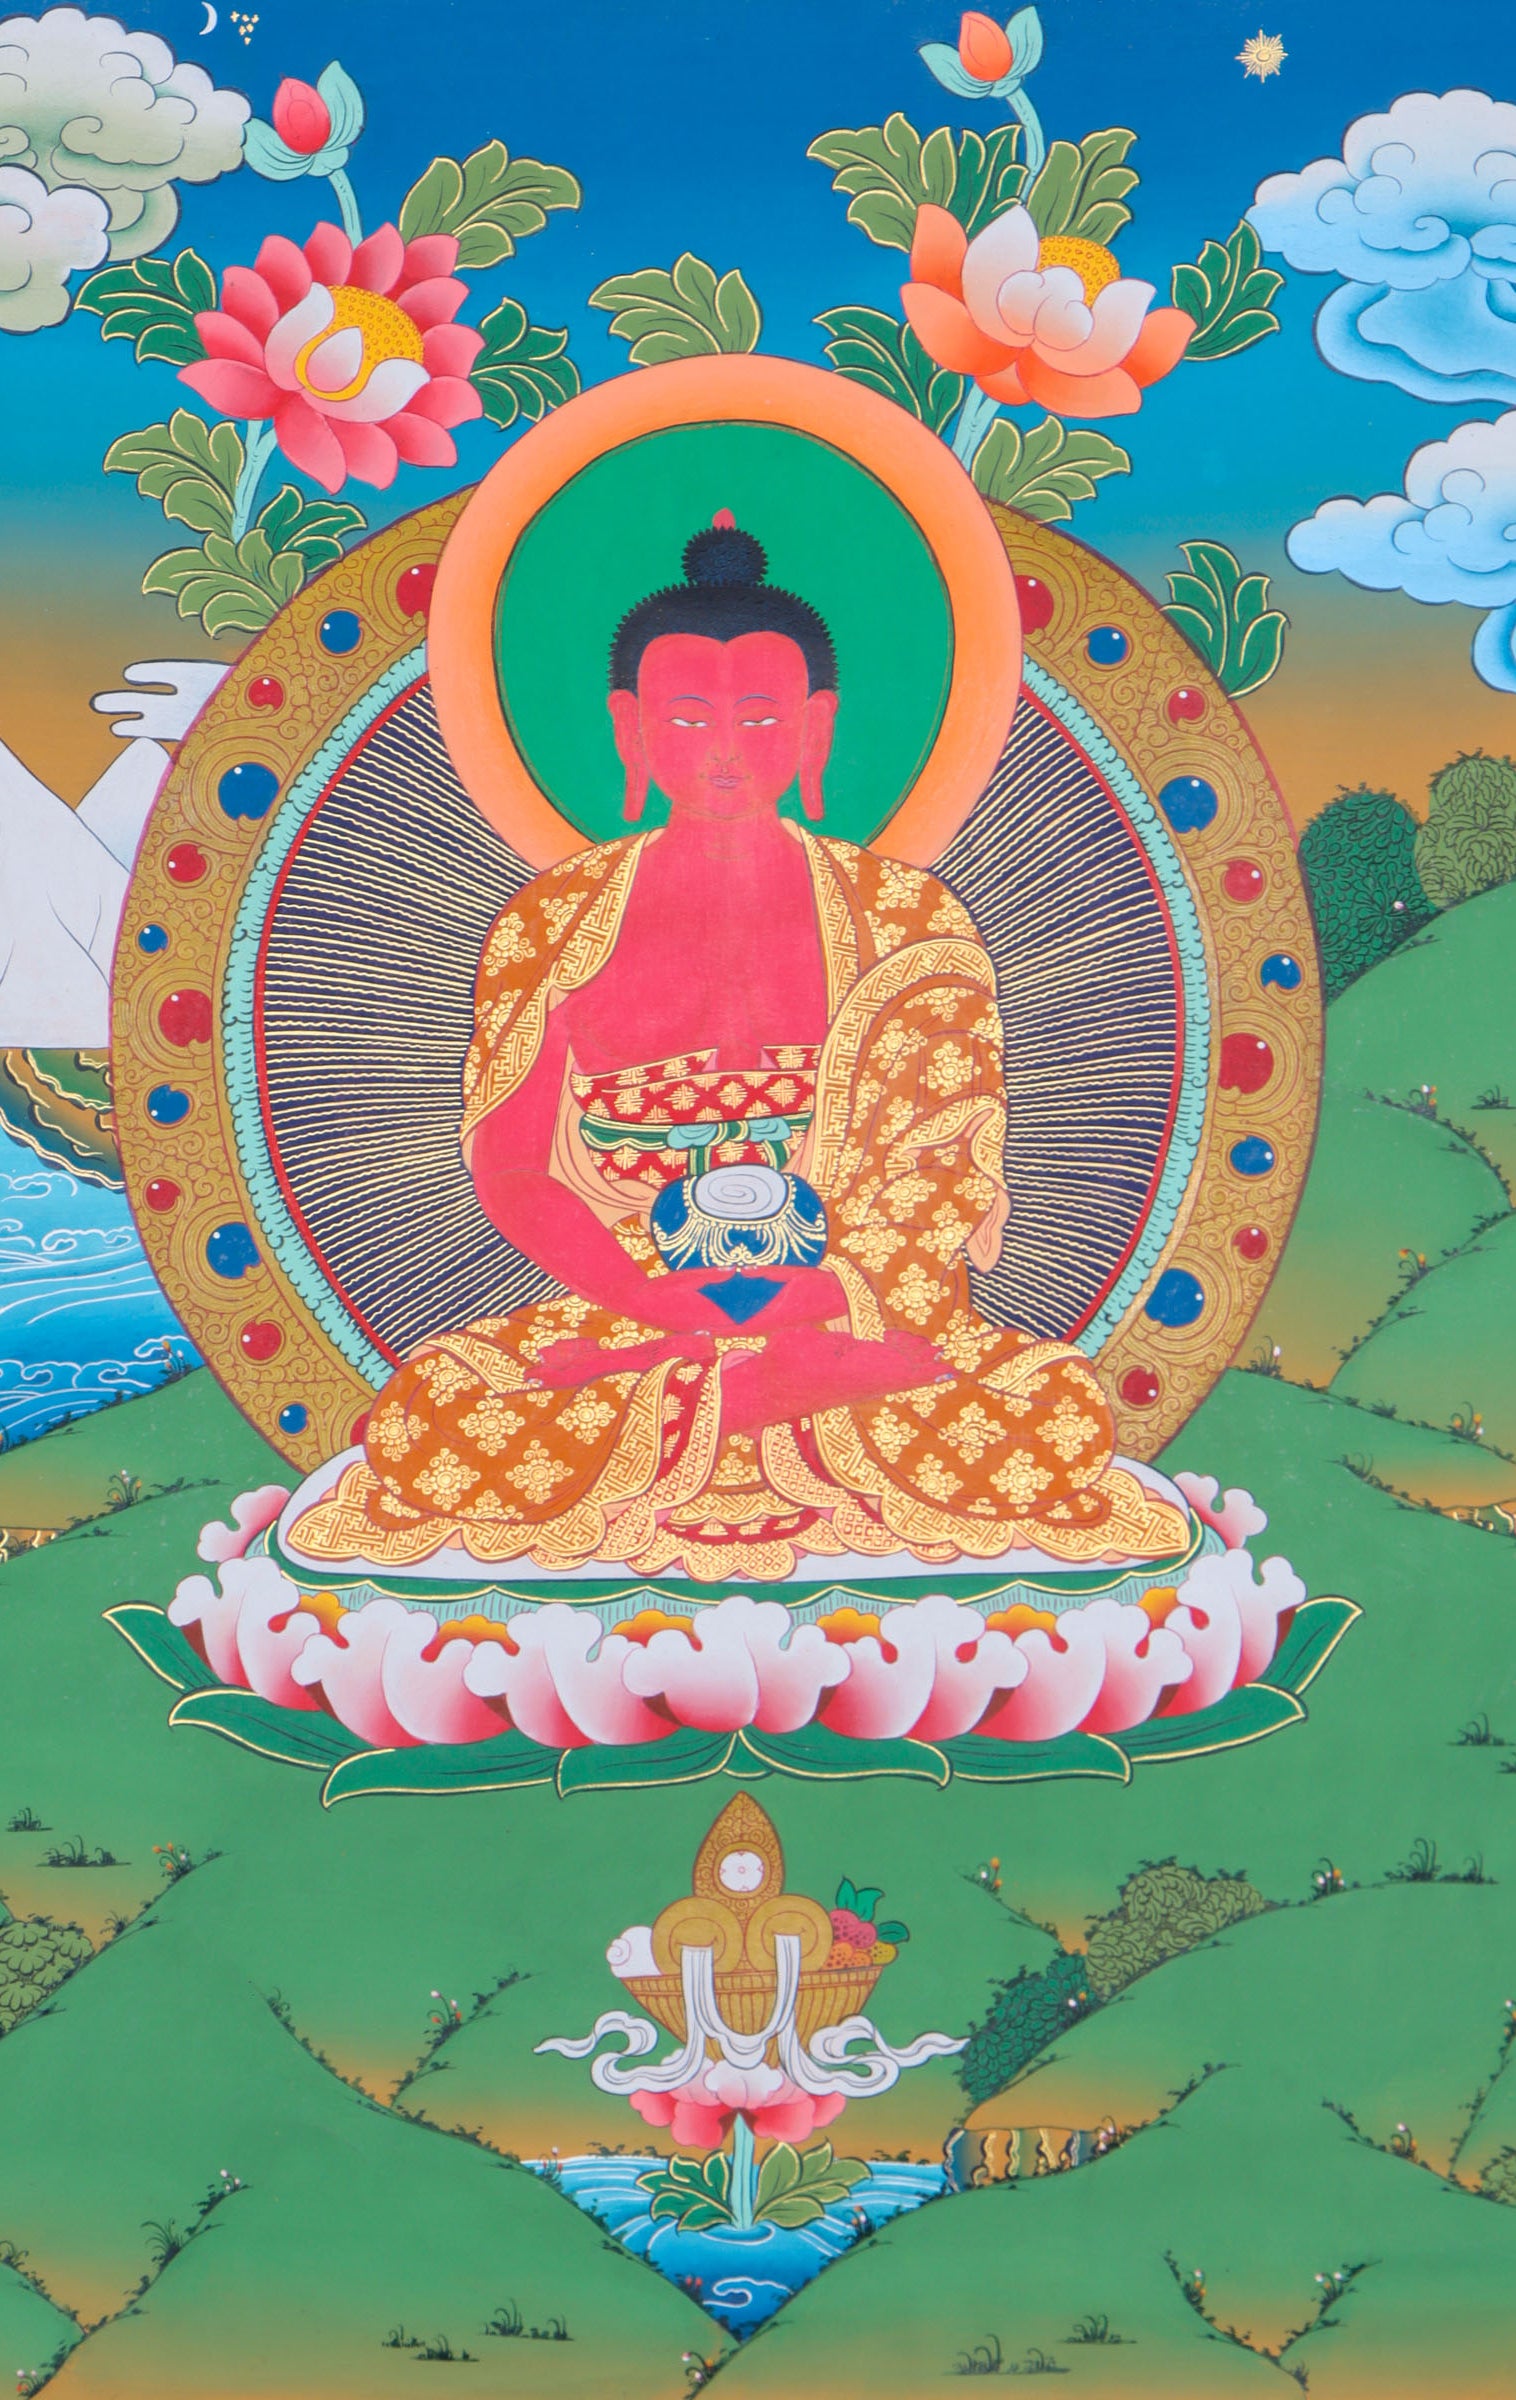 Amitabha Buddha Thangka Painting for enlightment.